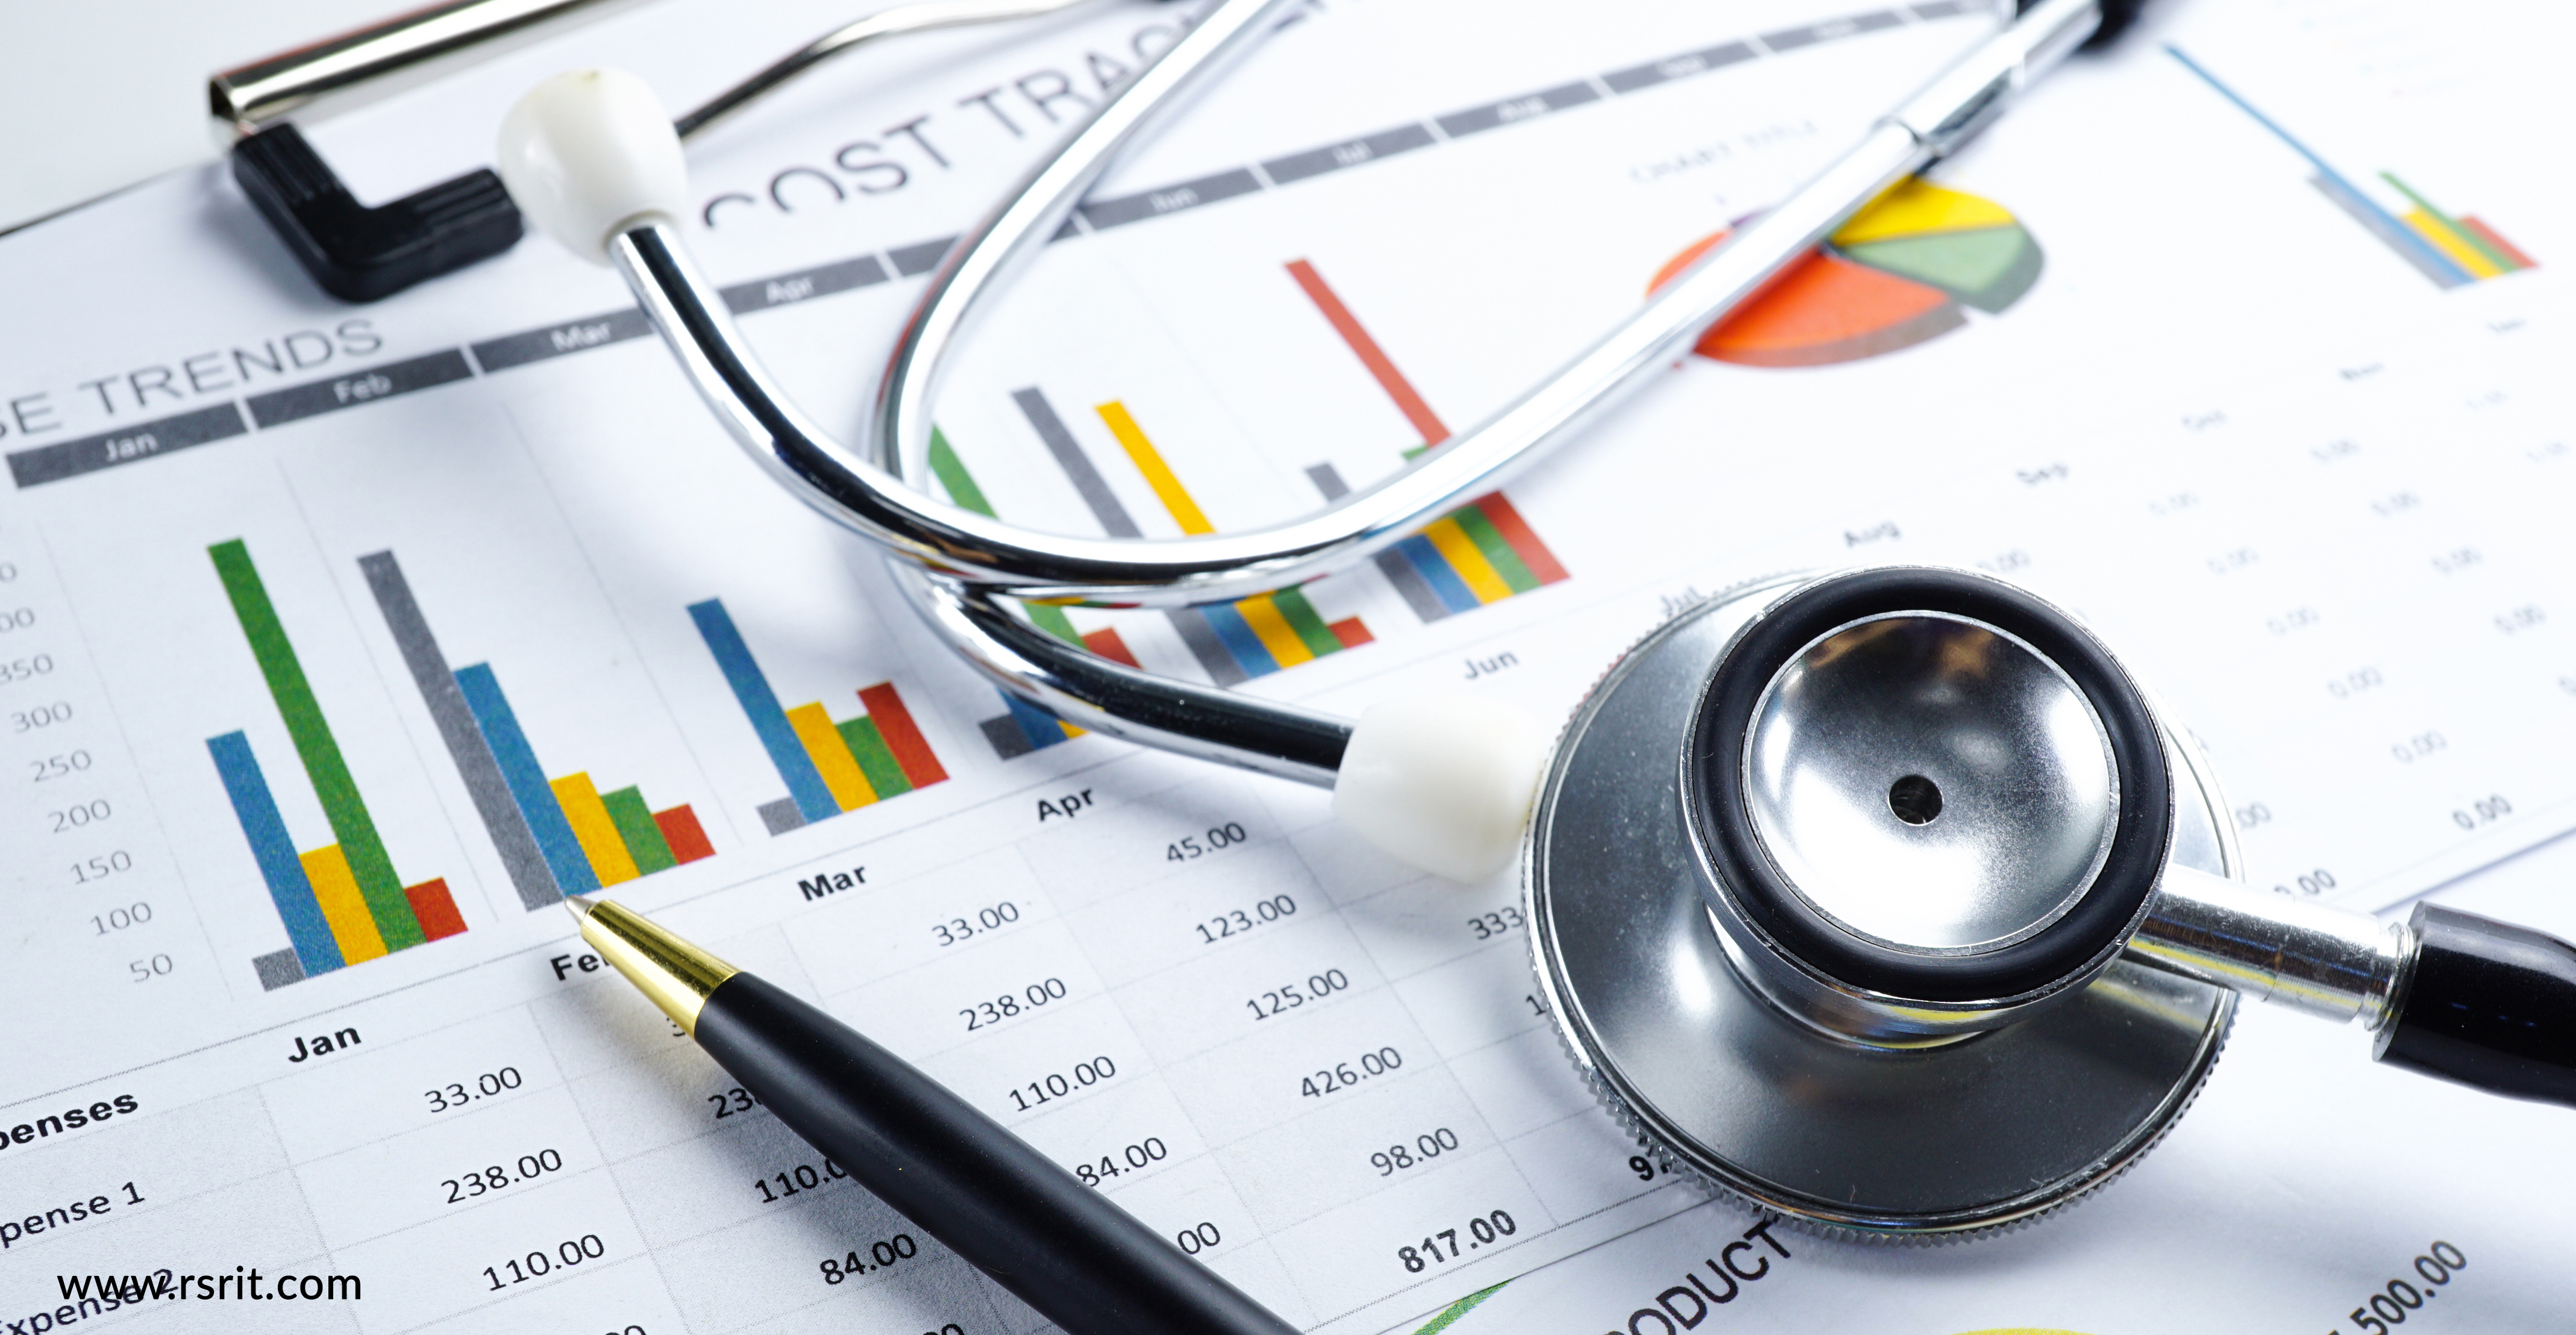 Predictive Analytics in health insurance: Retain high value customers